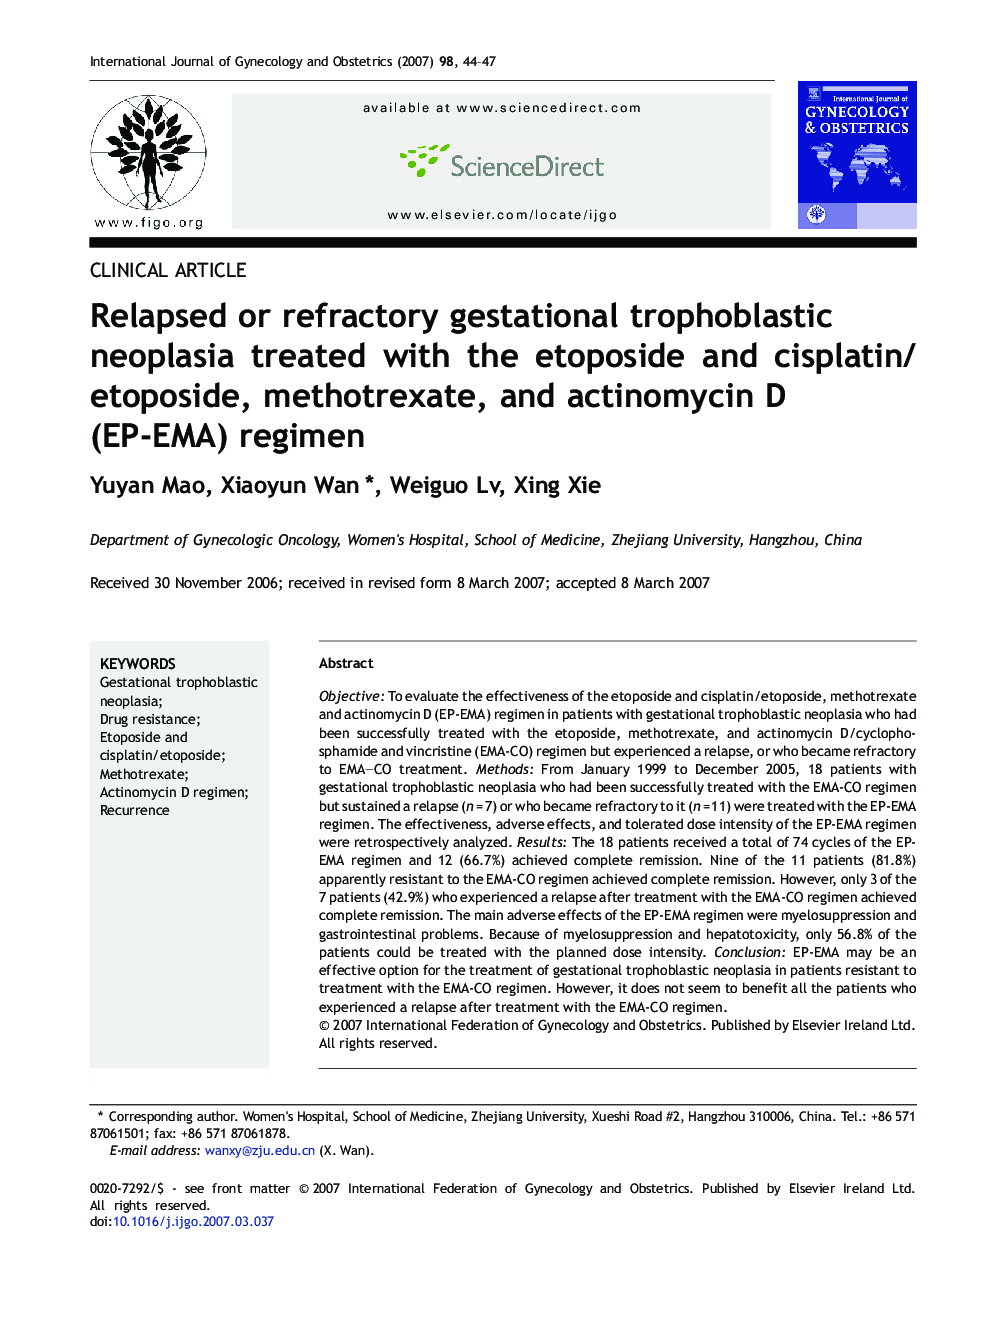 Relapsed or refractory gestational trophoblastic neoplasia treated with the etoposide and cisplatin/etoposide, methotrexate, and actinomycin D (EP-EMA) regimen